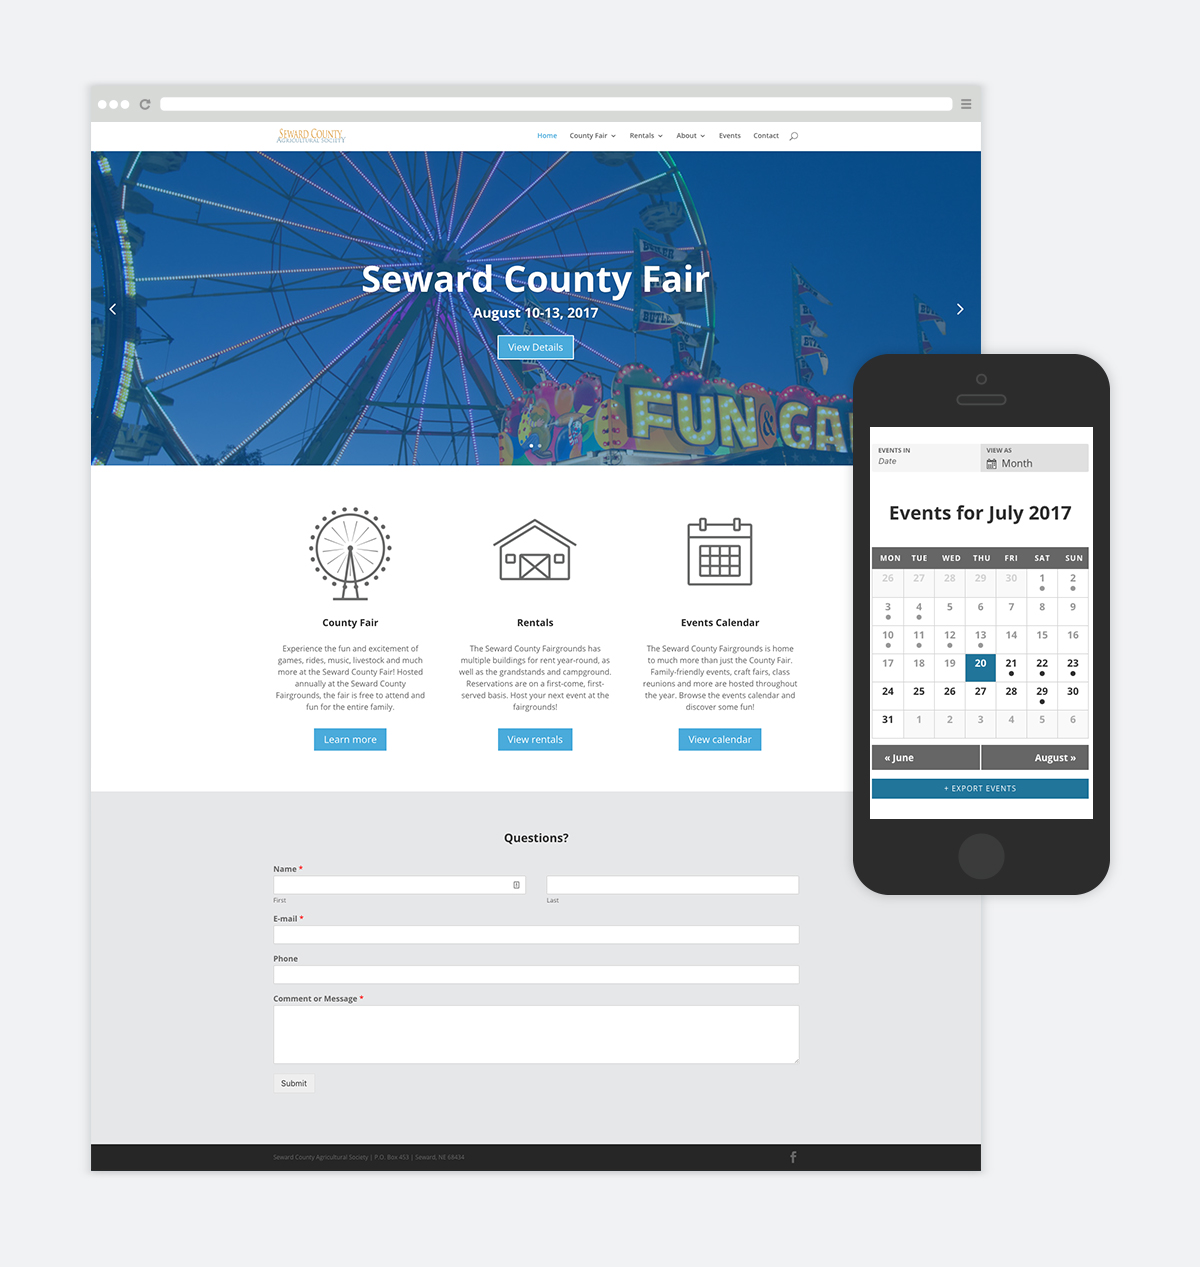 Seward County Fair Board Website